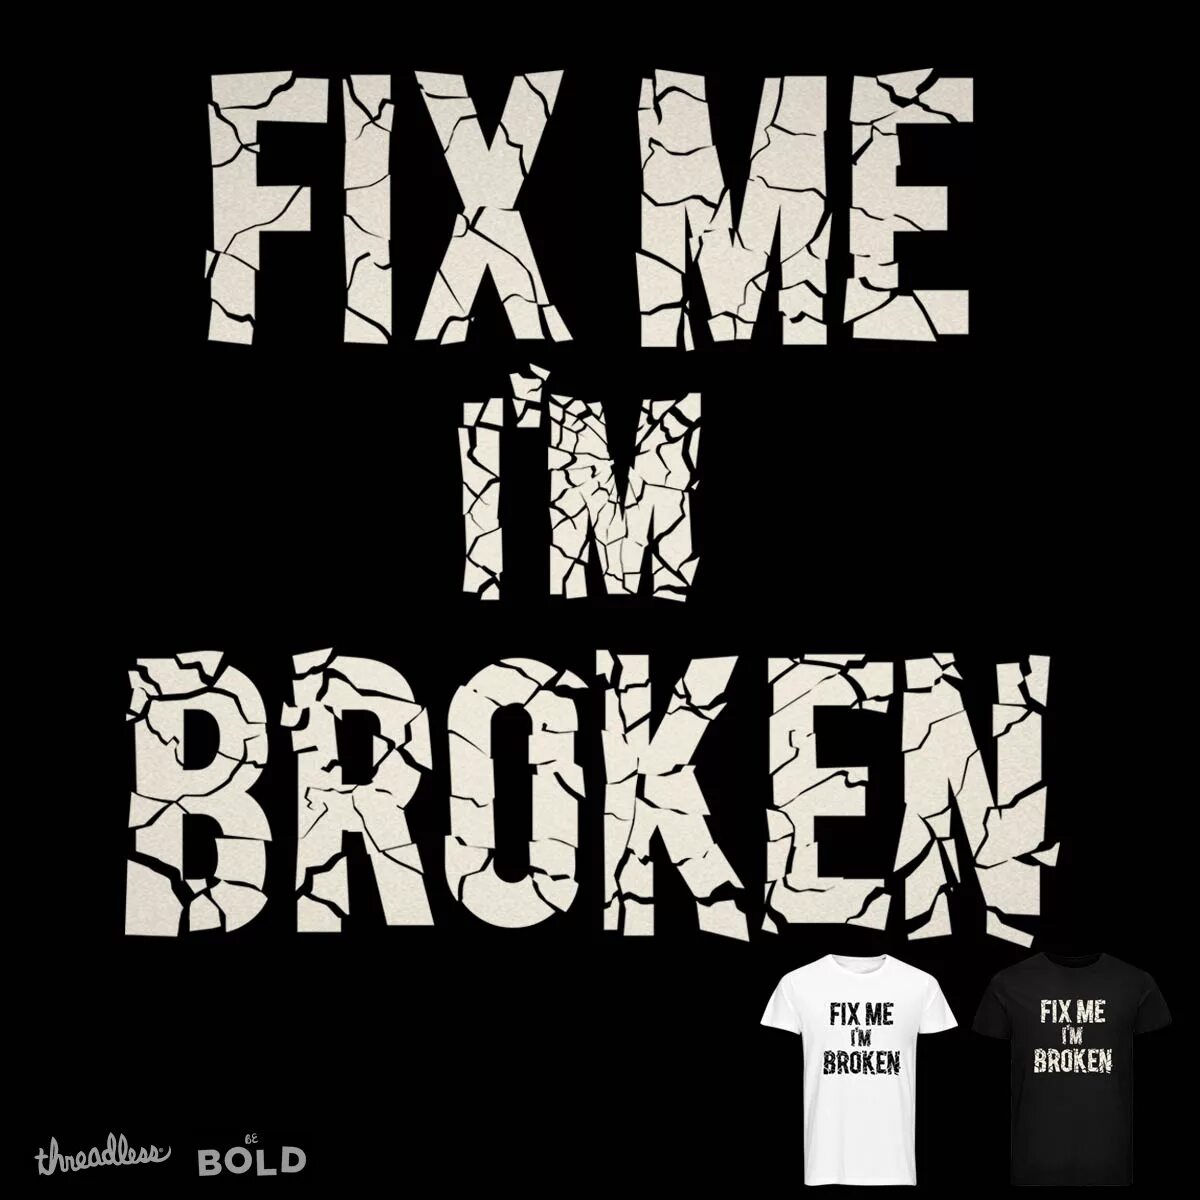 L am broken. Обои i am broken. I am broken обои на телефон. Broken надпись. Обои im ok broken.